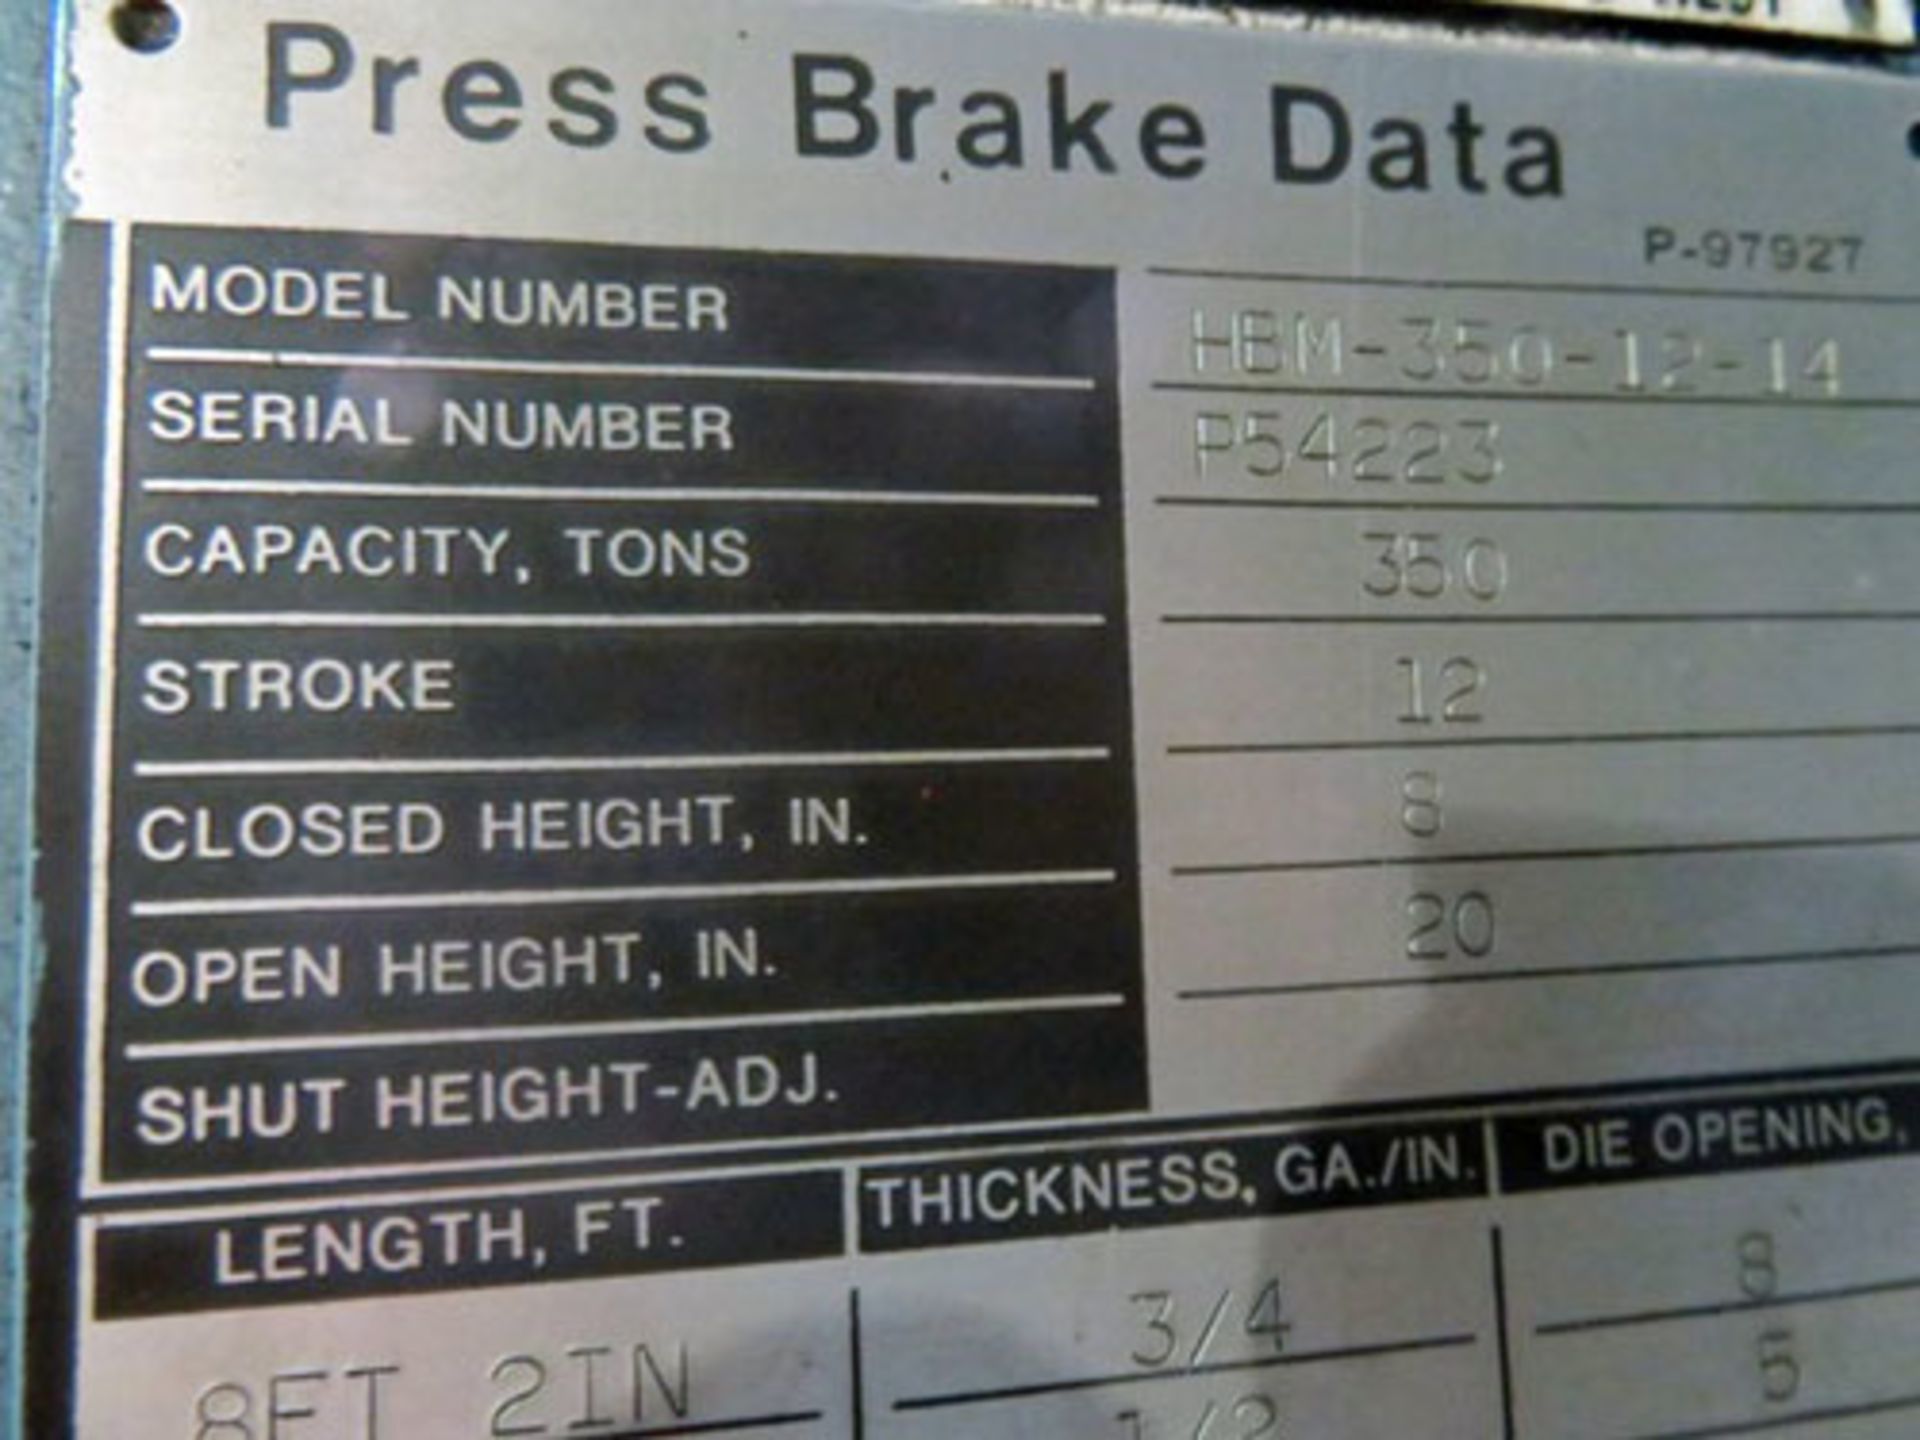 1995 Niagara CNC 2 Axis Hydraulic Press Brake, 350 Ton x 14', Mdl: HBM-350-12-14, S/N: P54223 ( - Image 6 of 6